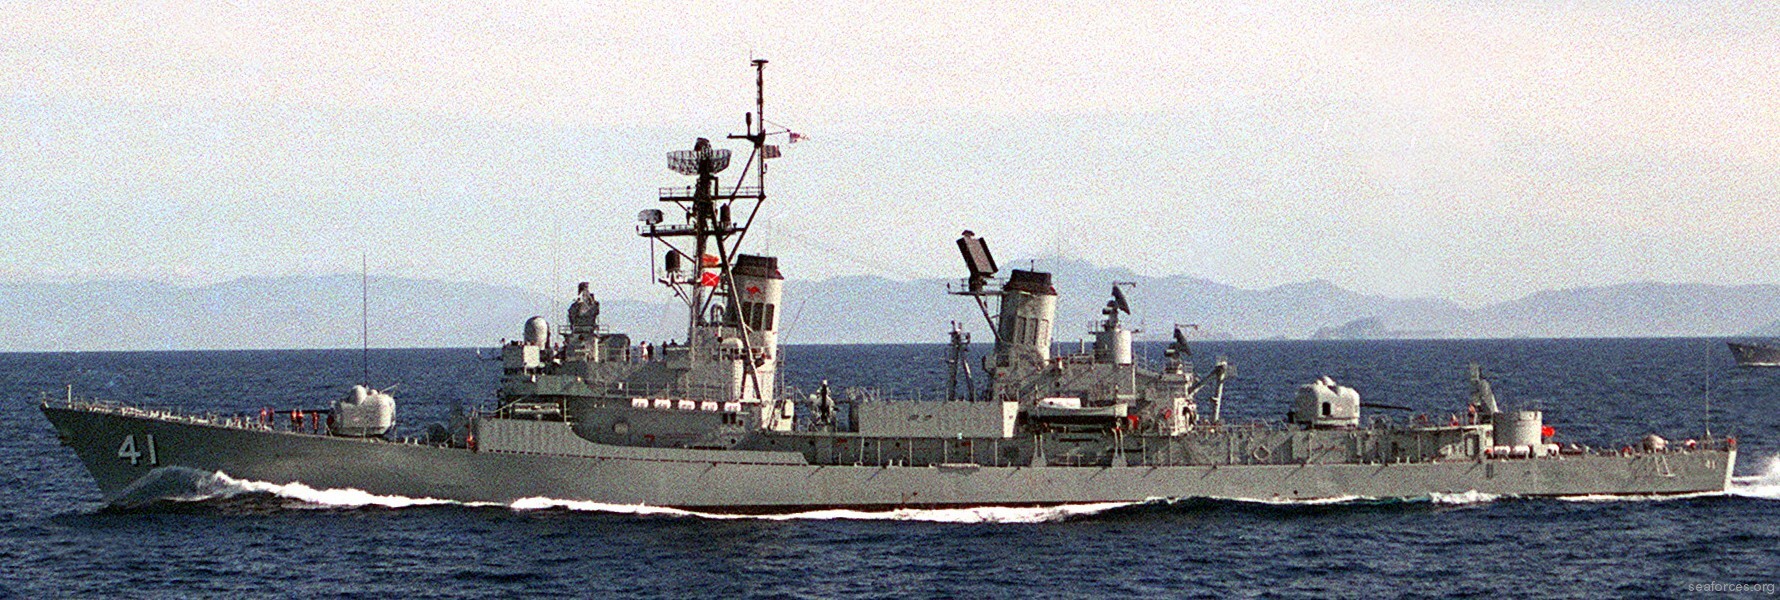 hmas brisbane ddg-41 perth class guided missile destroyer royal australian navy 03